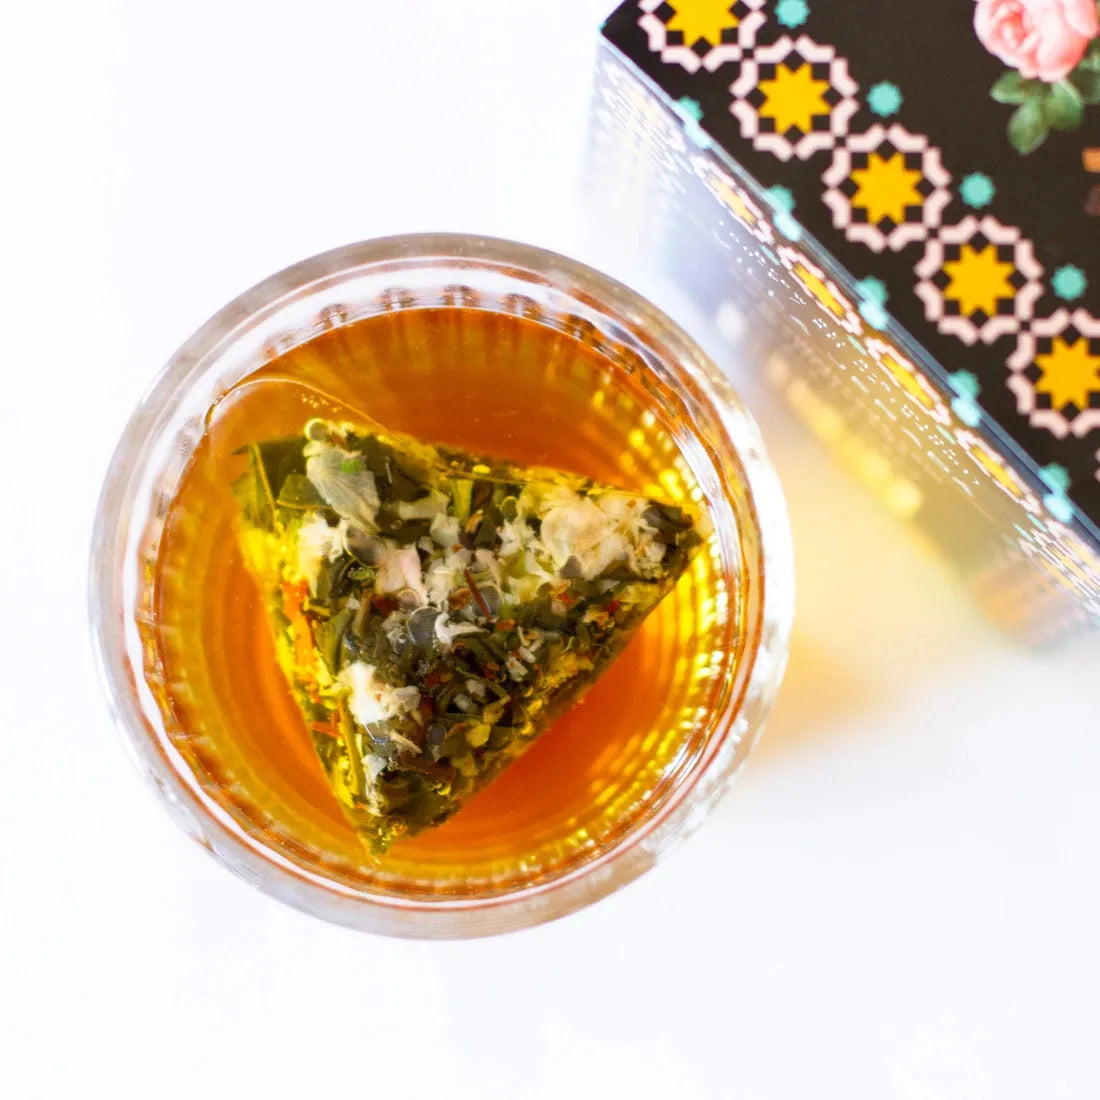 Moroccan Saffron Rose Tea